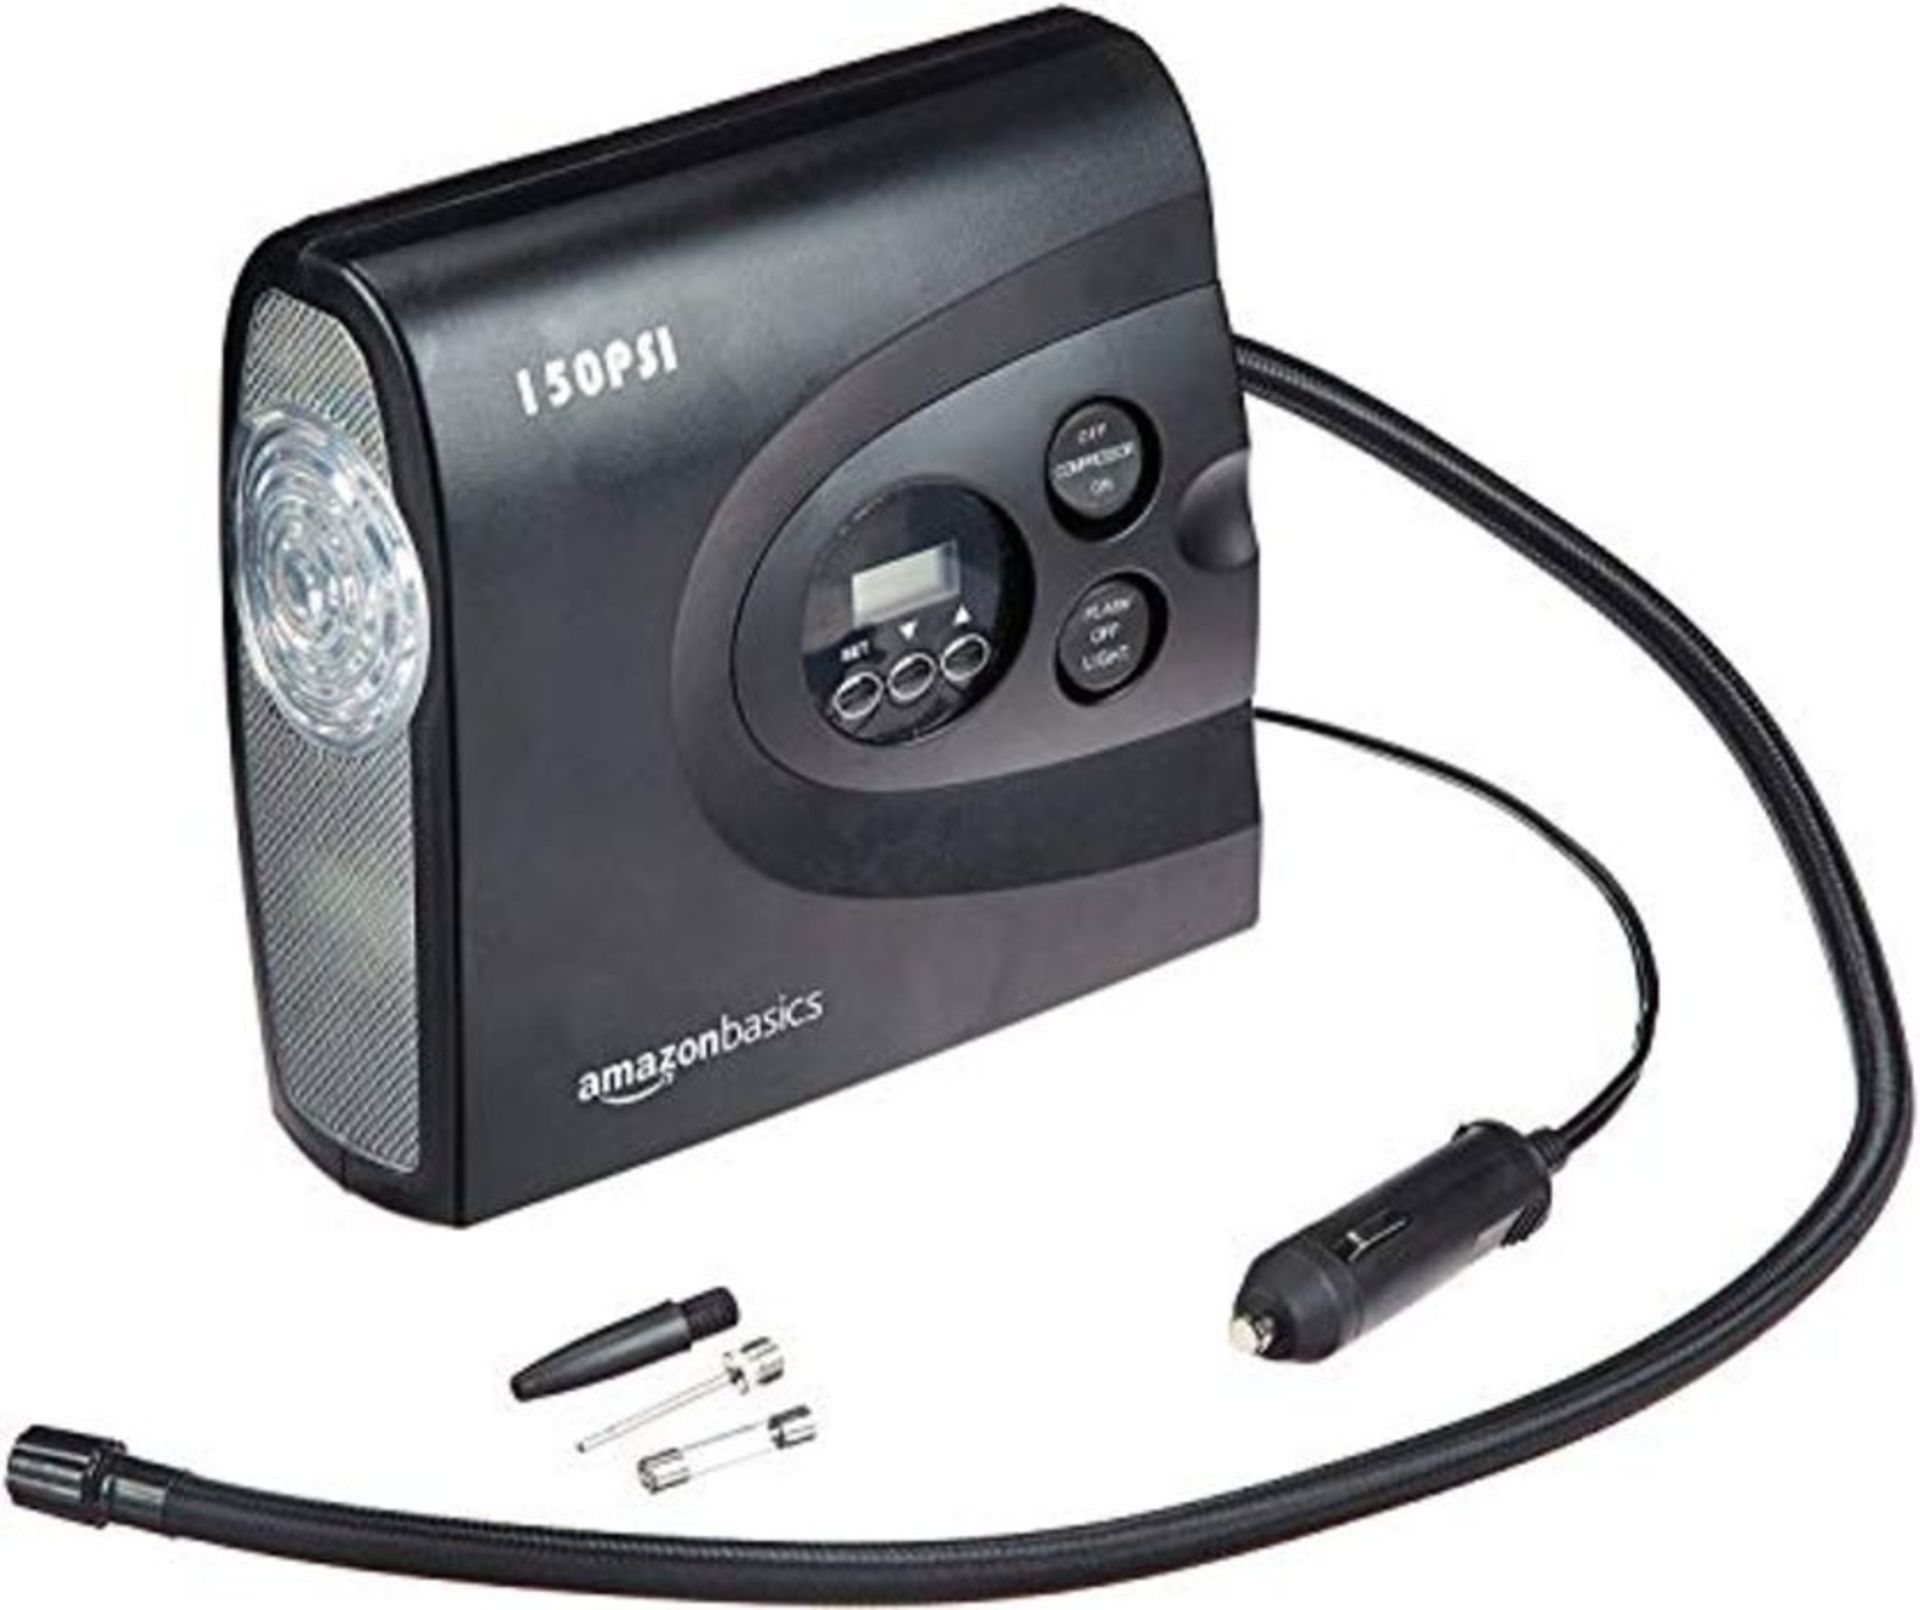 Amazon Basics Compact Portable Air Compressor with LED Light, DC 12V, 150 PSI